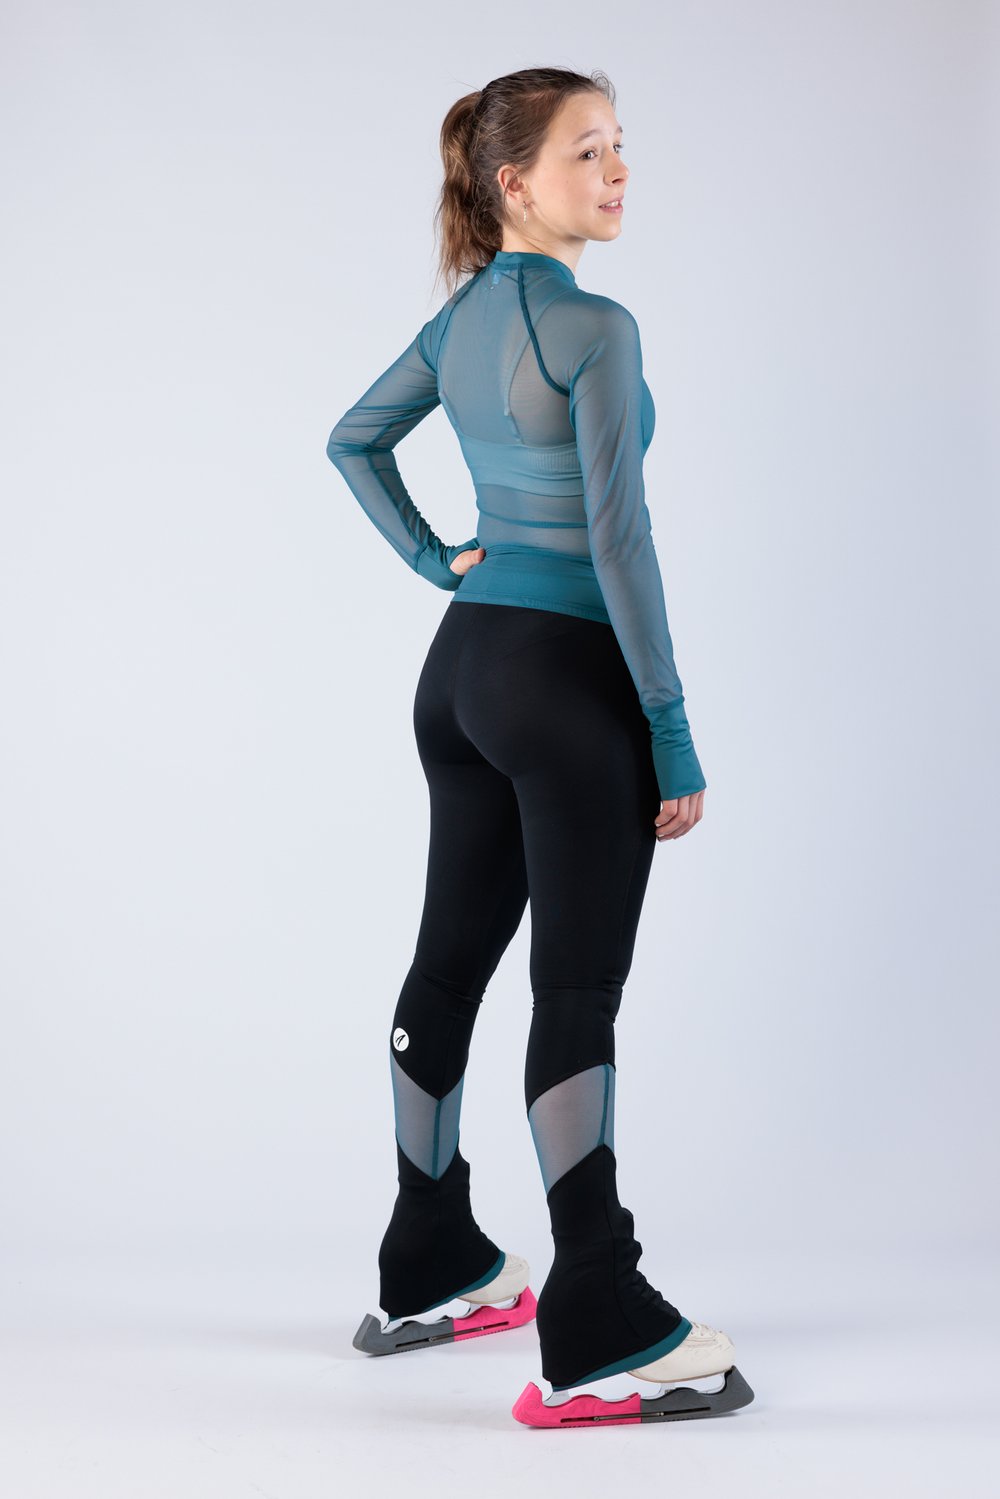 Mesh Back Figure Skating Training Top — Alexice Designs